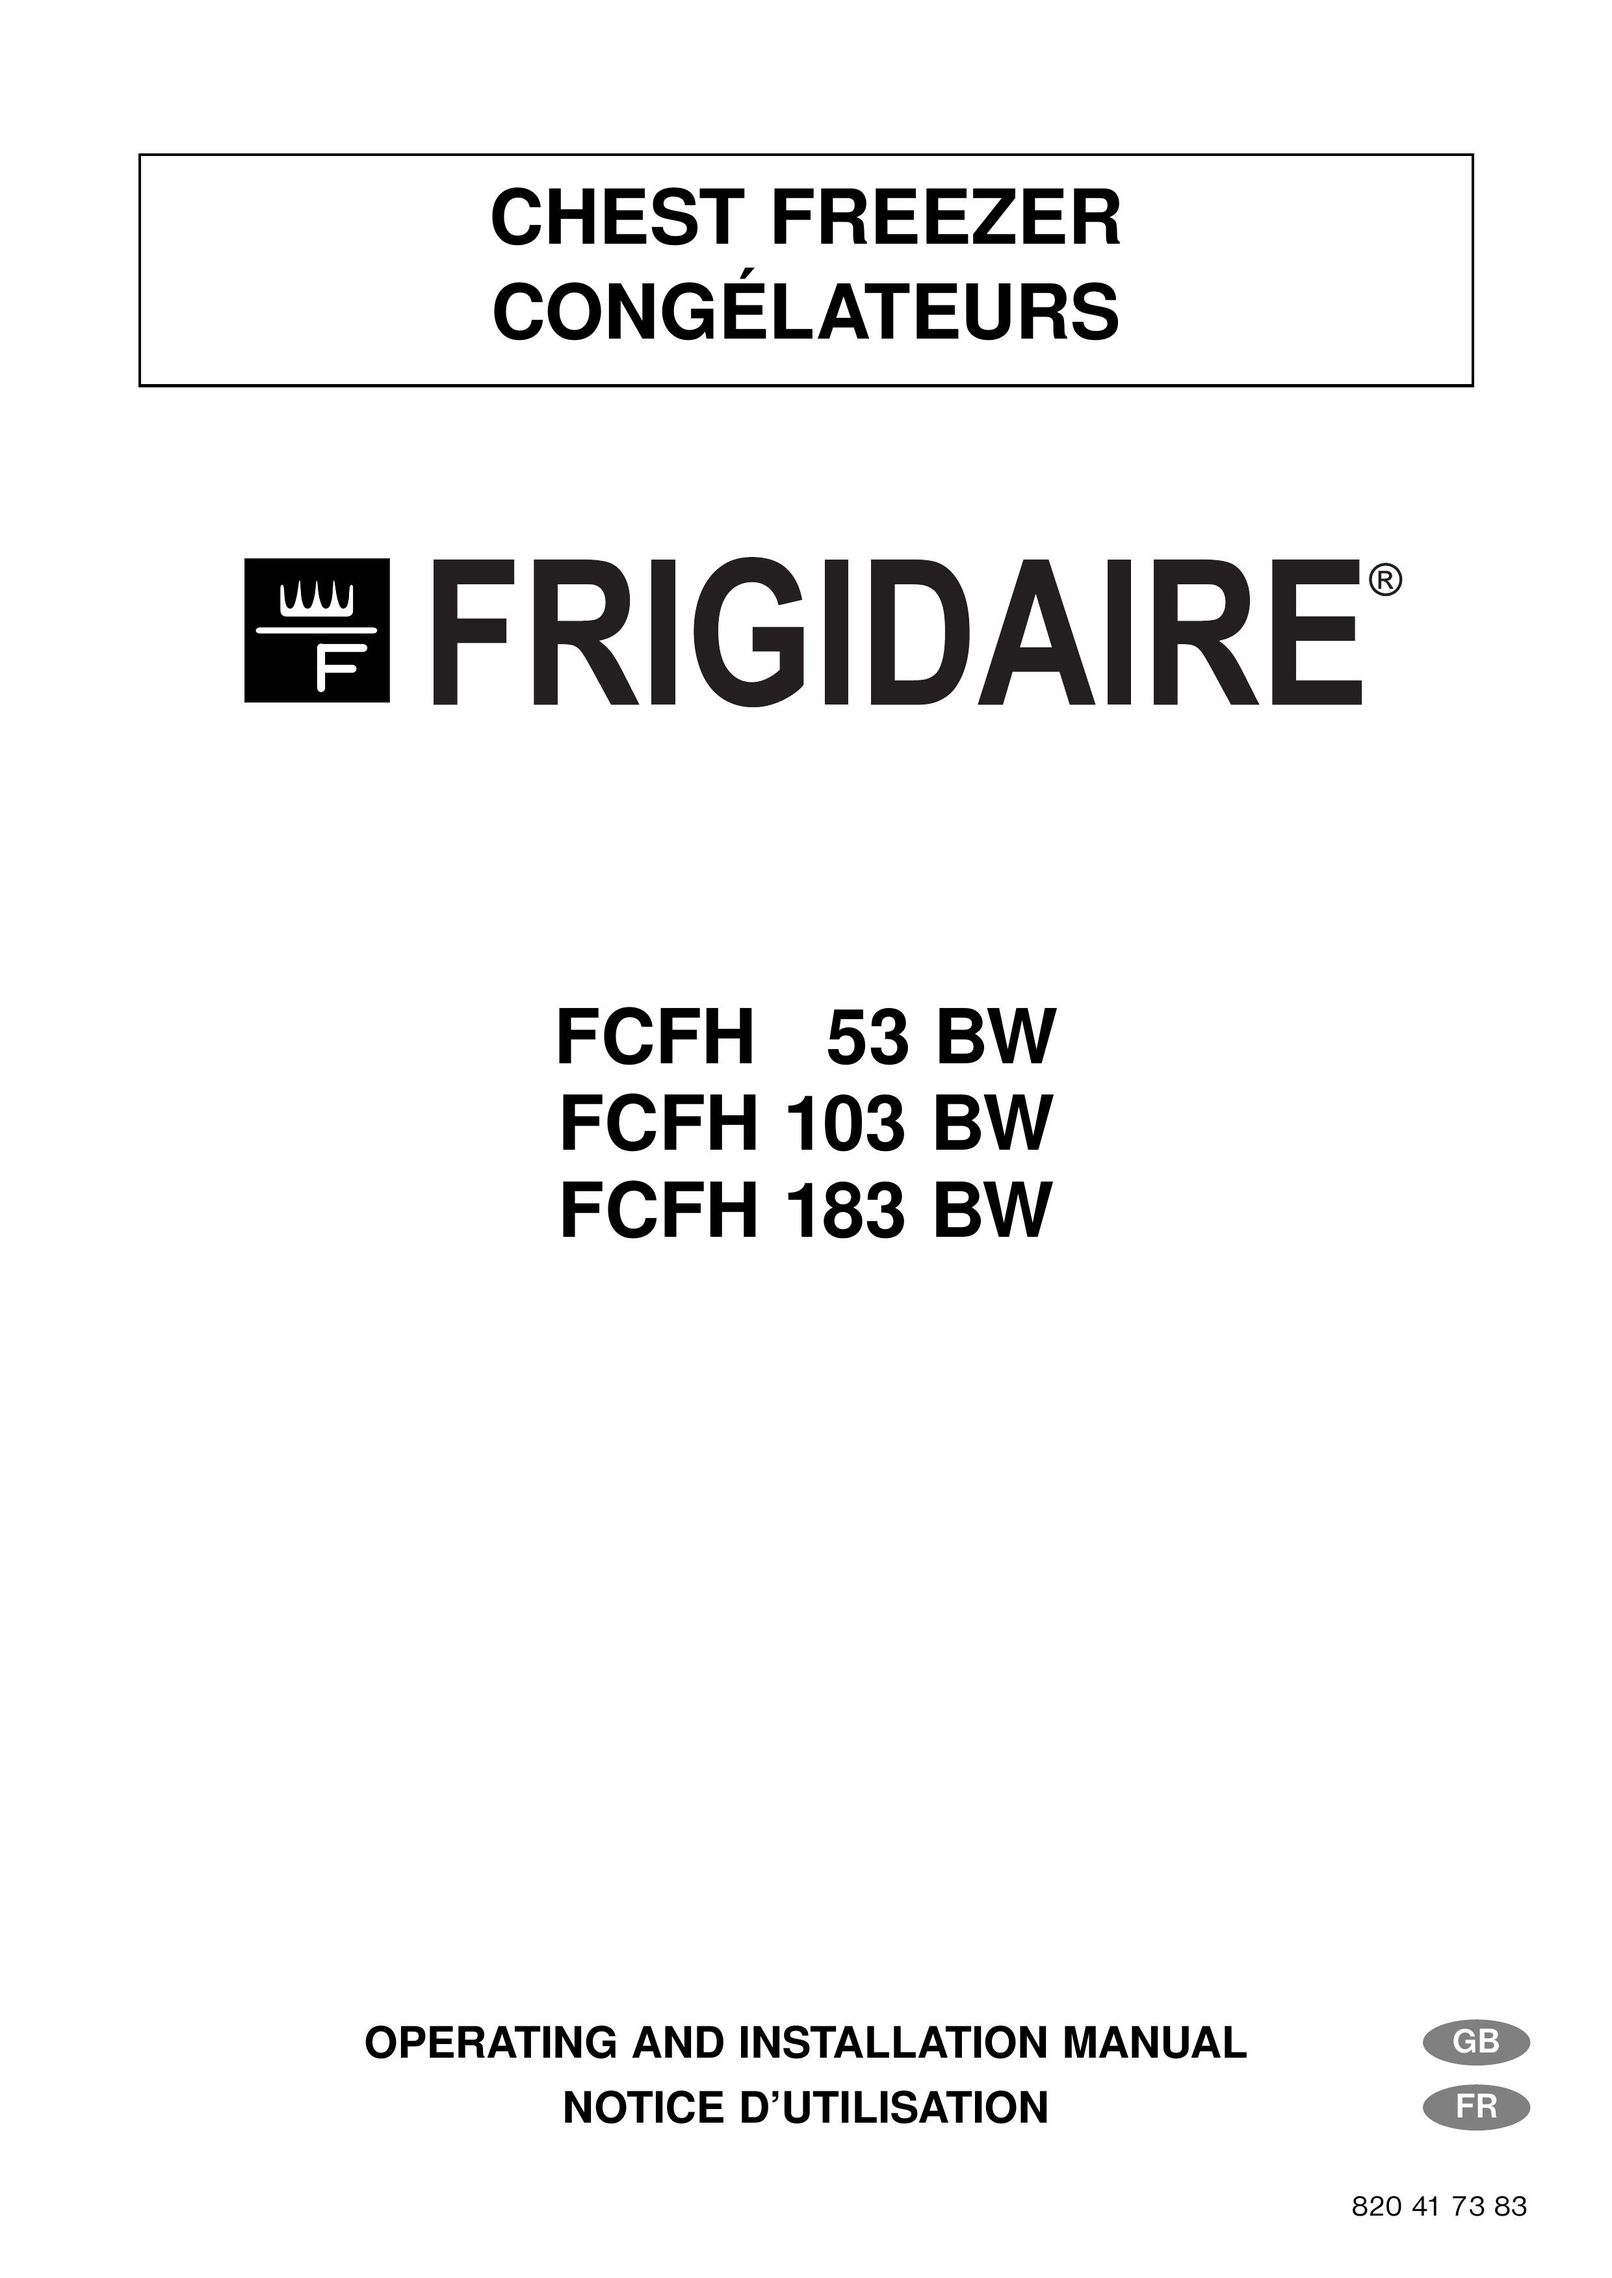 Frigidaire FCFH 183 BW Freezer User Manual